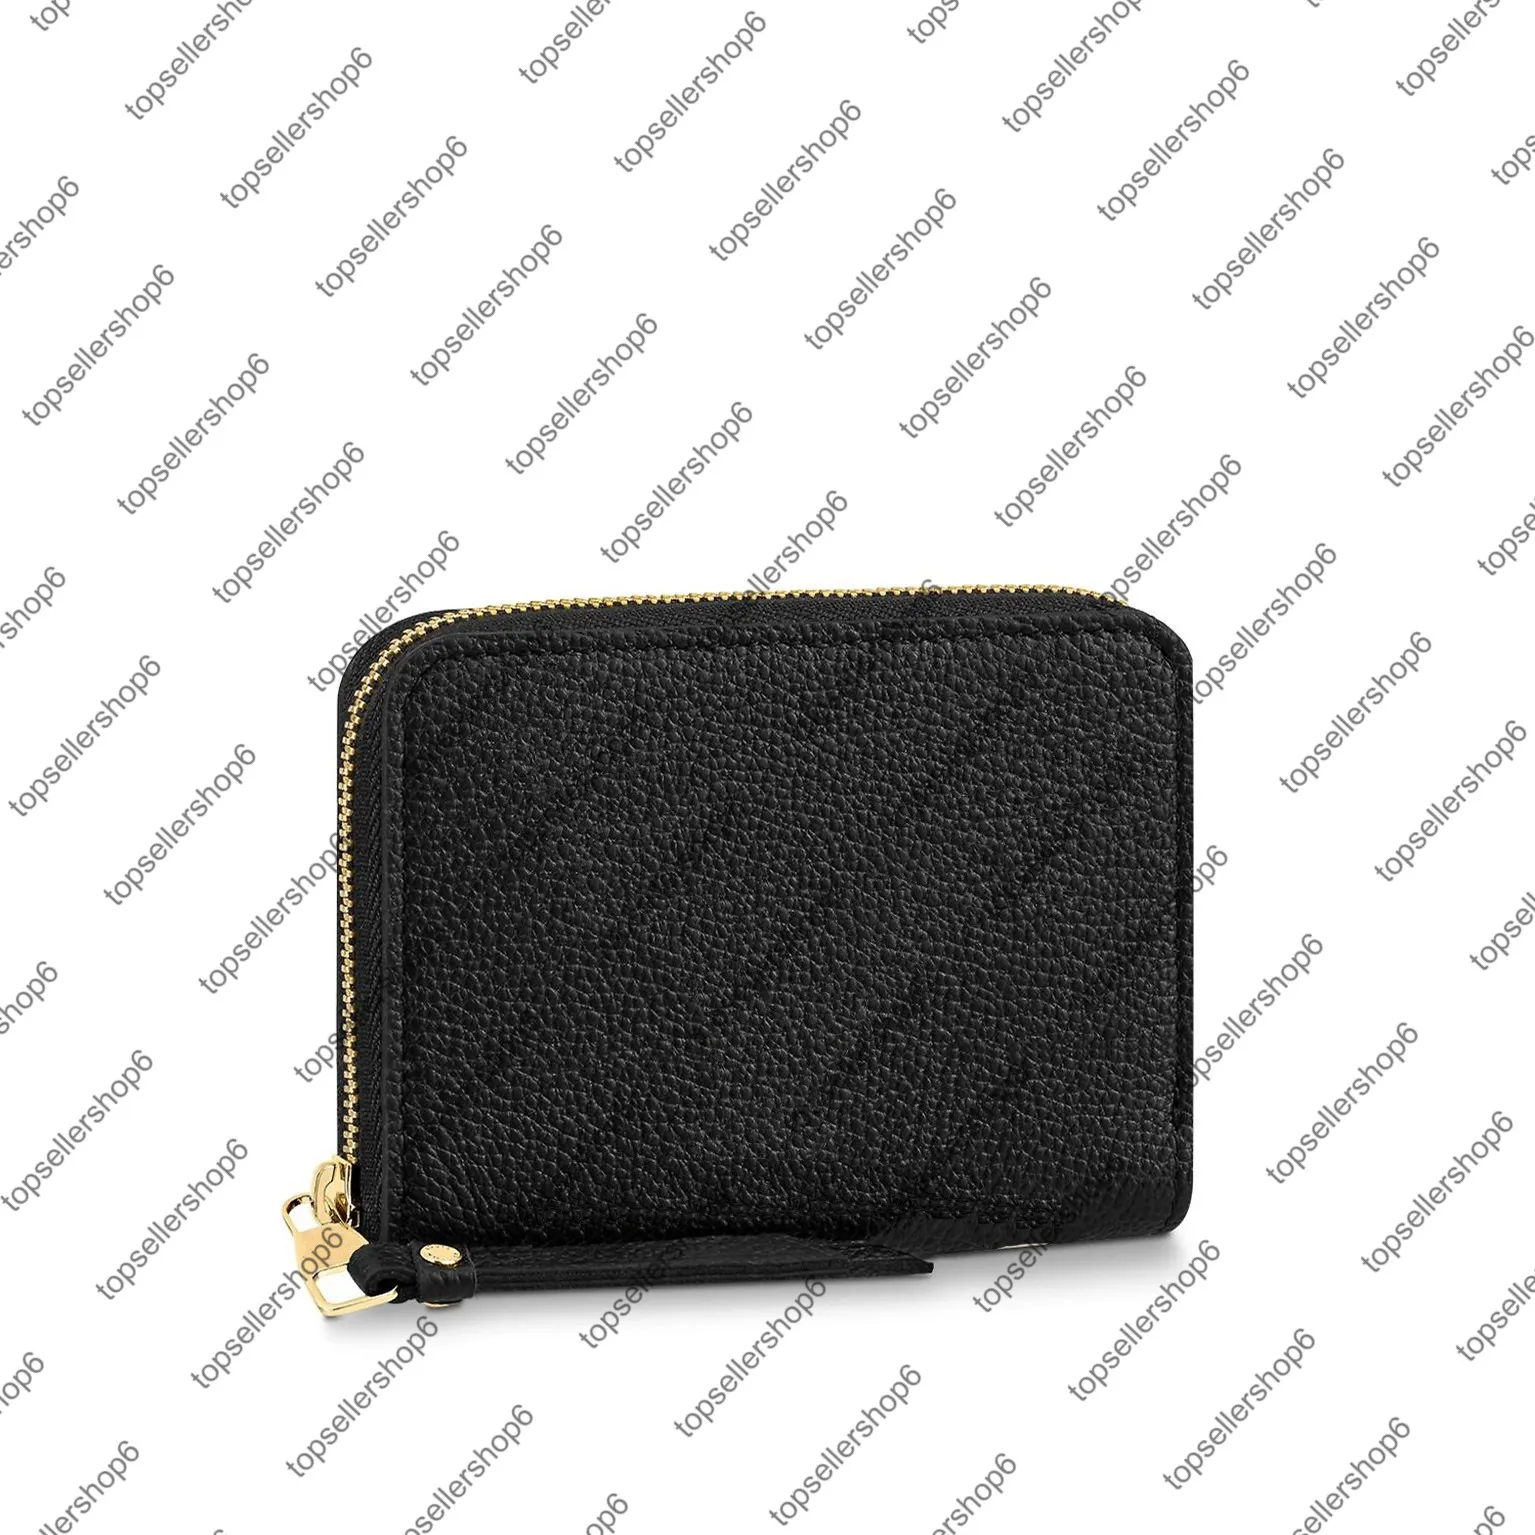 M69794 M69787 Zippy Coin Geldbörse Brieftasche Real Cowhide Leather Women Cash Card Coin Wallet Bag244t